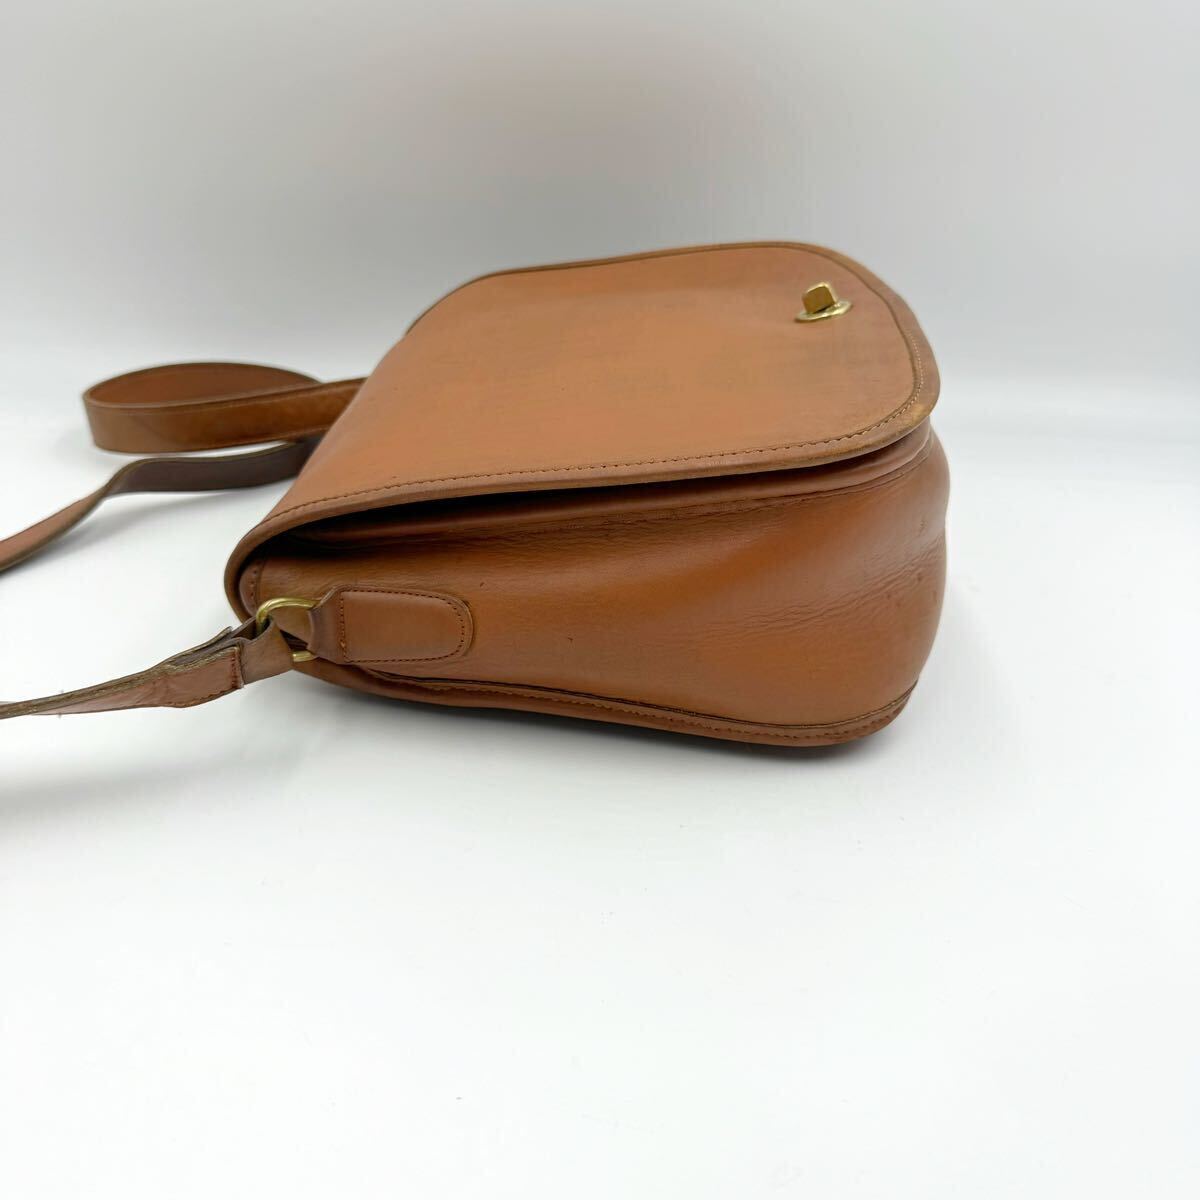 1 jpy OLD COACH Old Coach shoulder bag Turn lock glove tan leather Brown Vintage diagonal ..